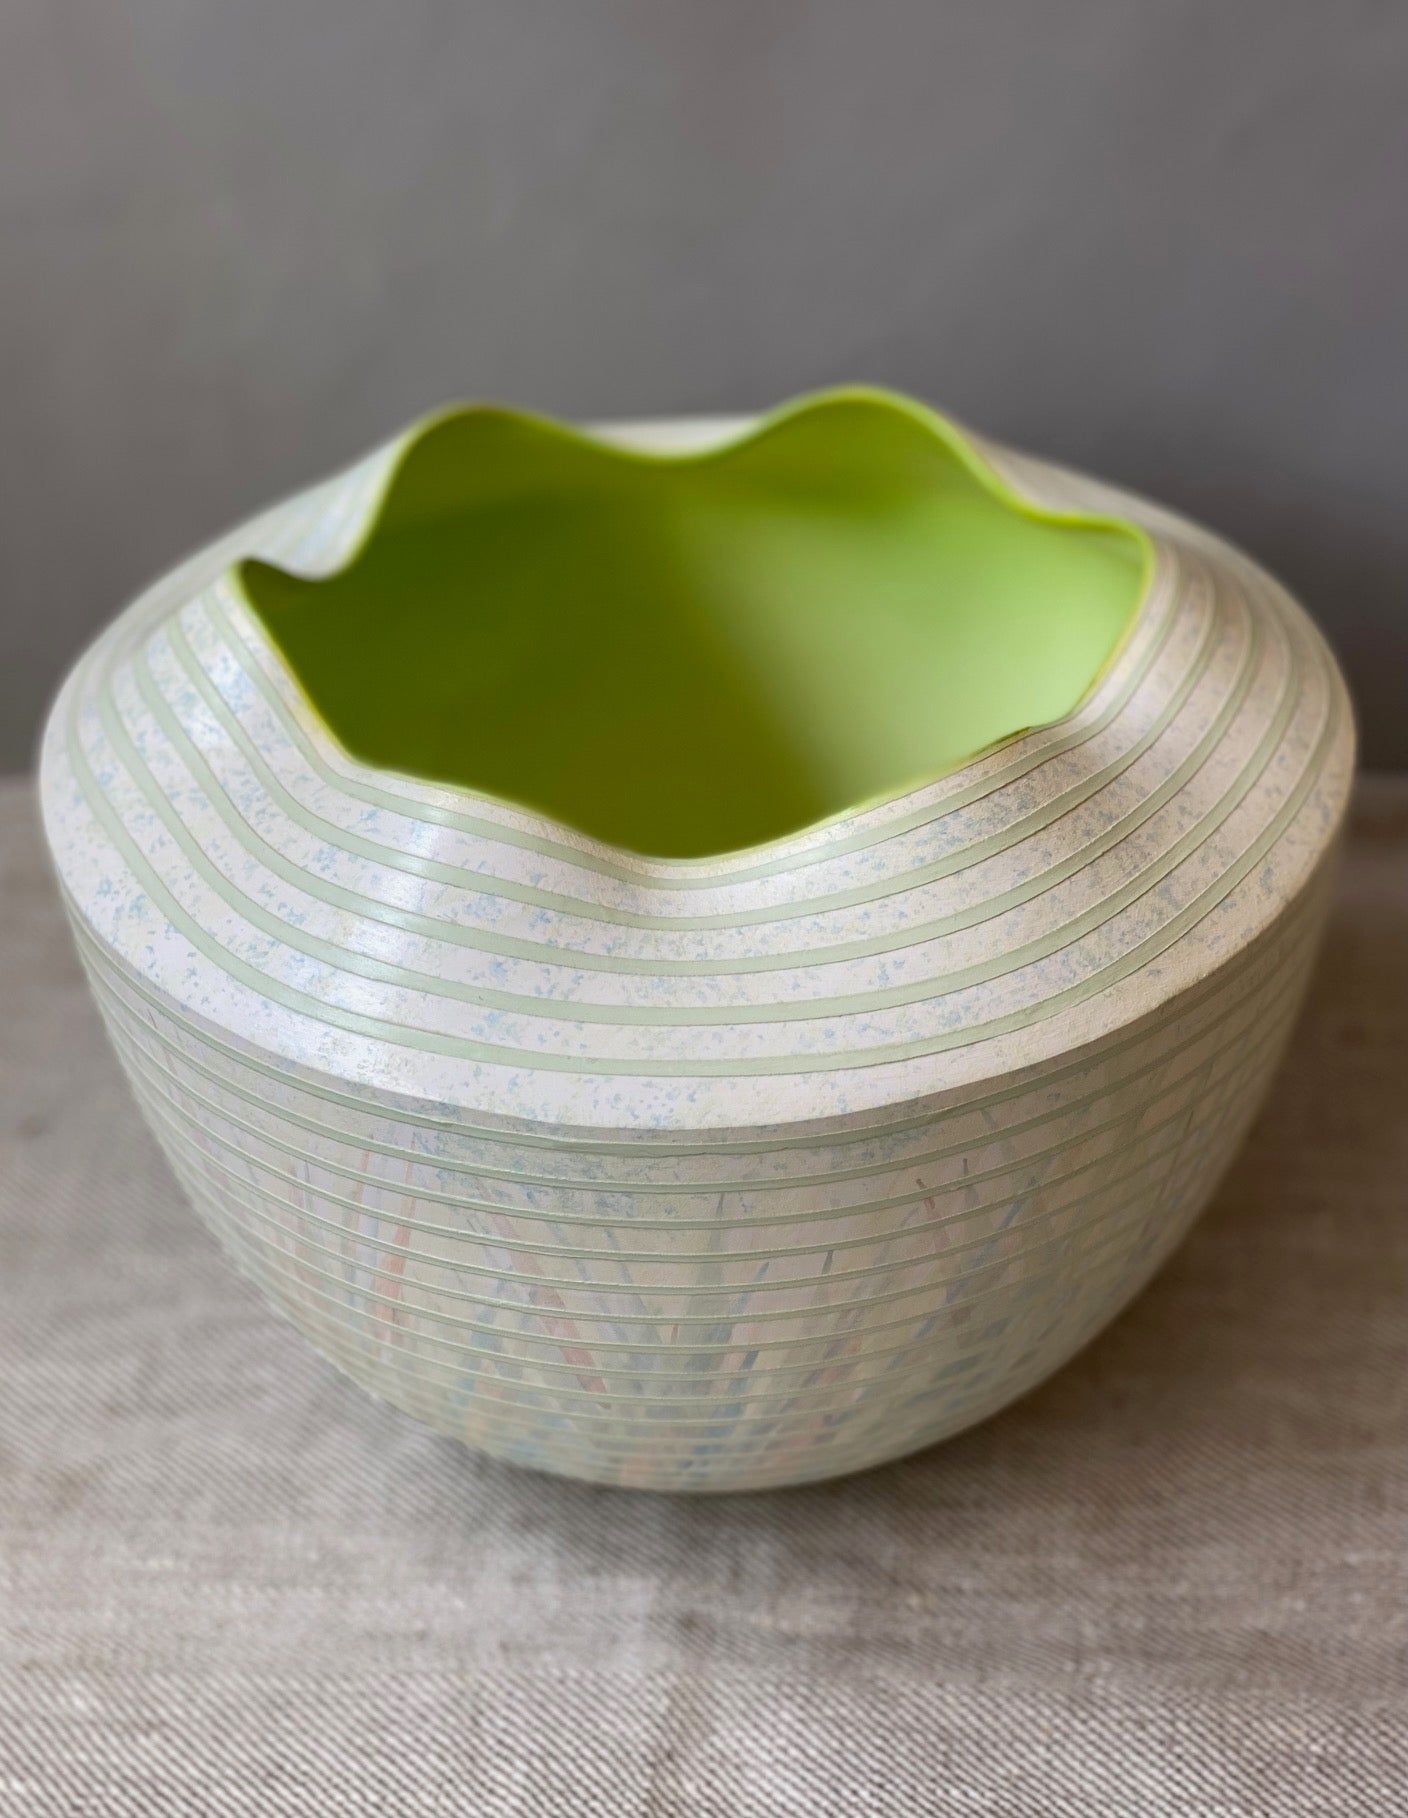 Medium pentangular bowl in green